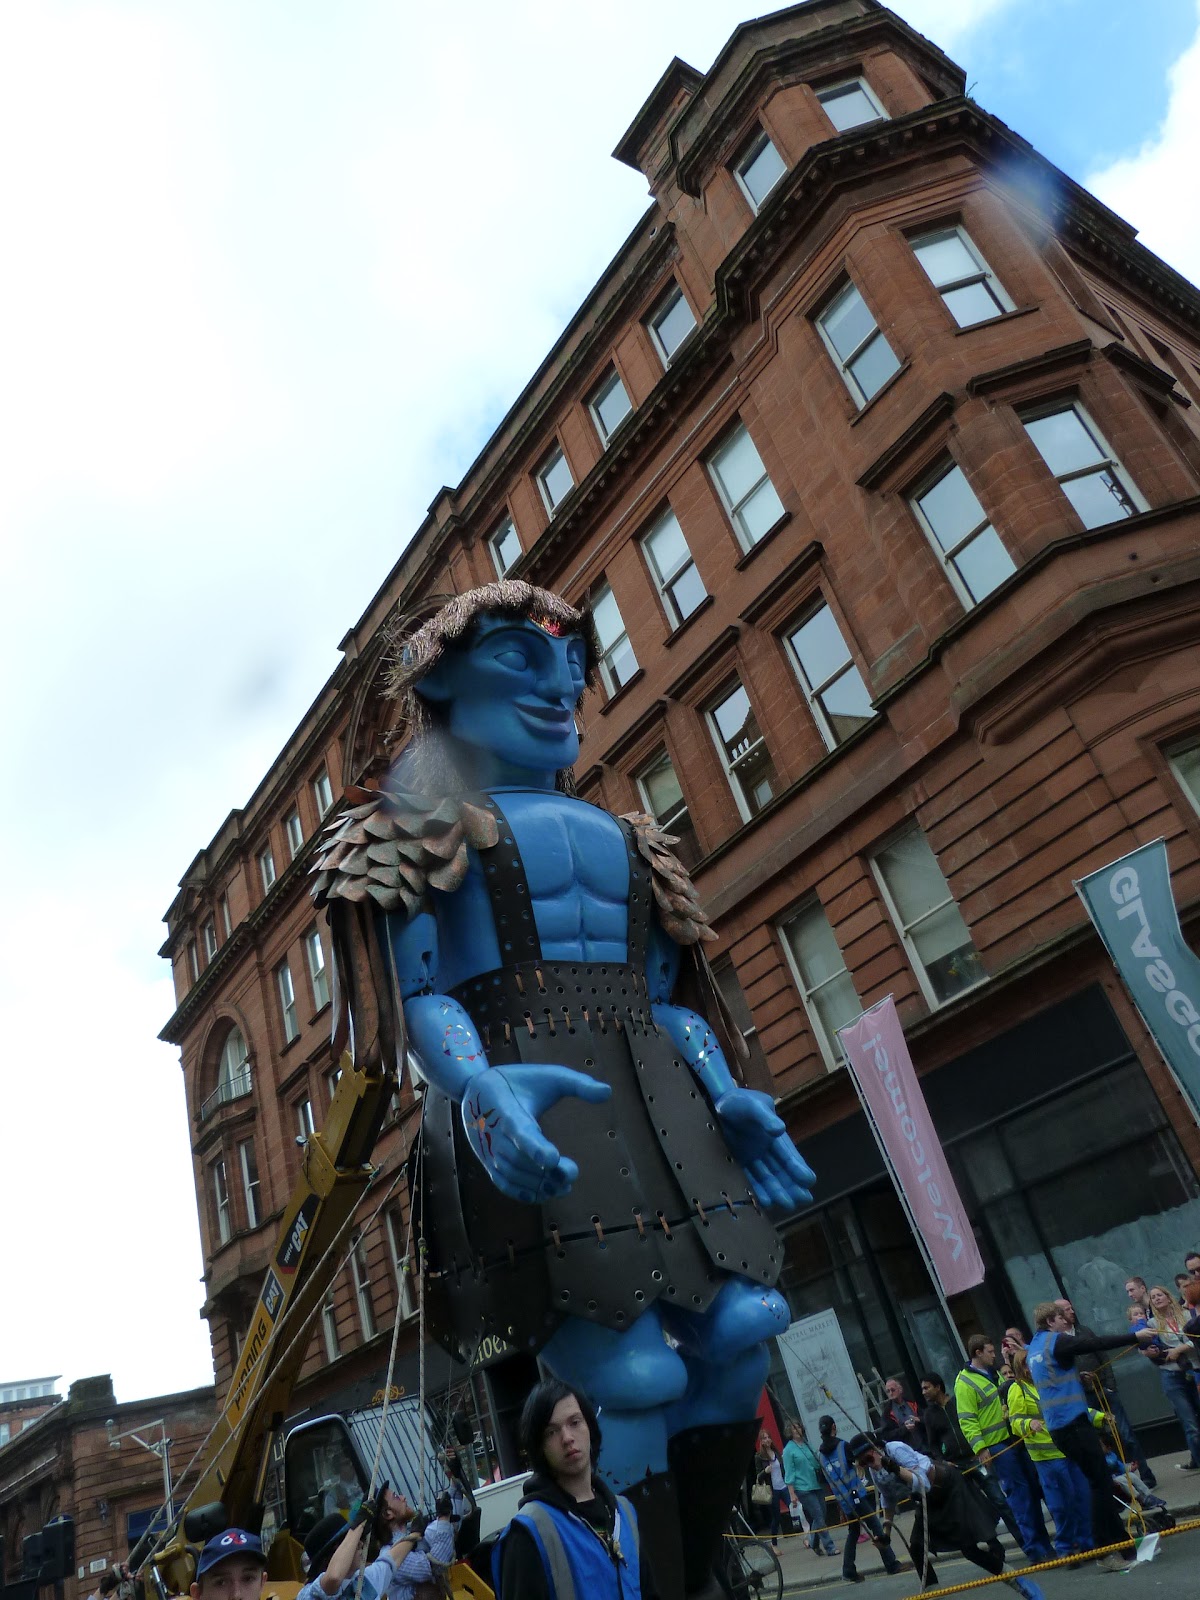 The Big Man at Glasgow's Merchant City Festival